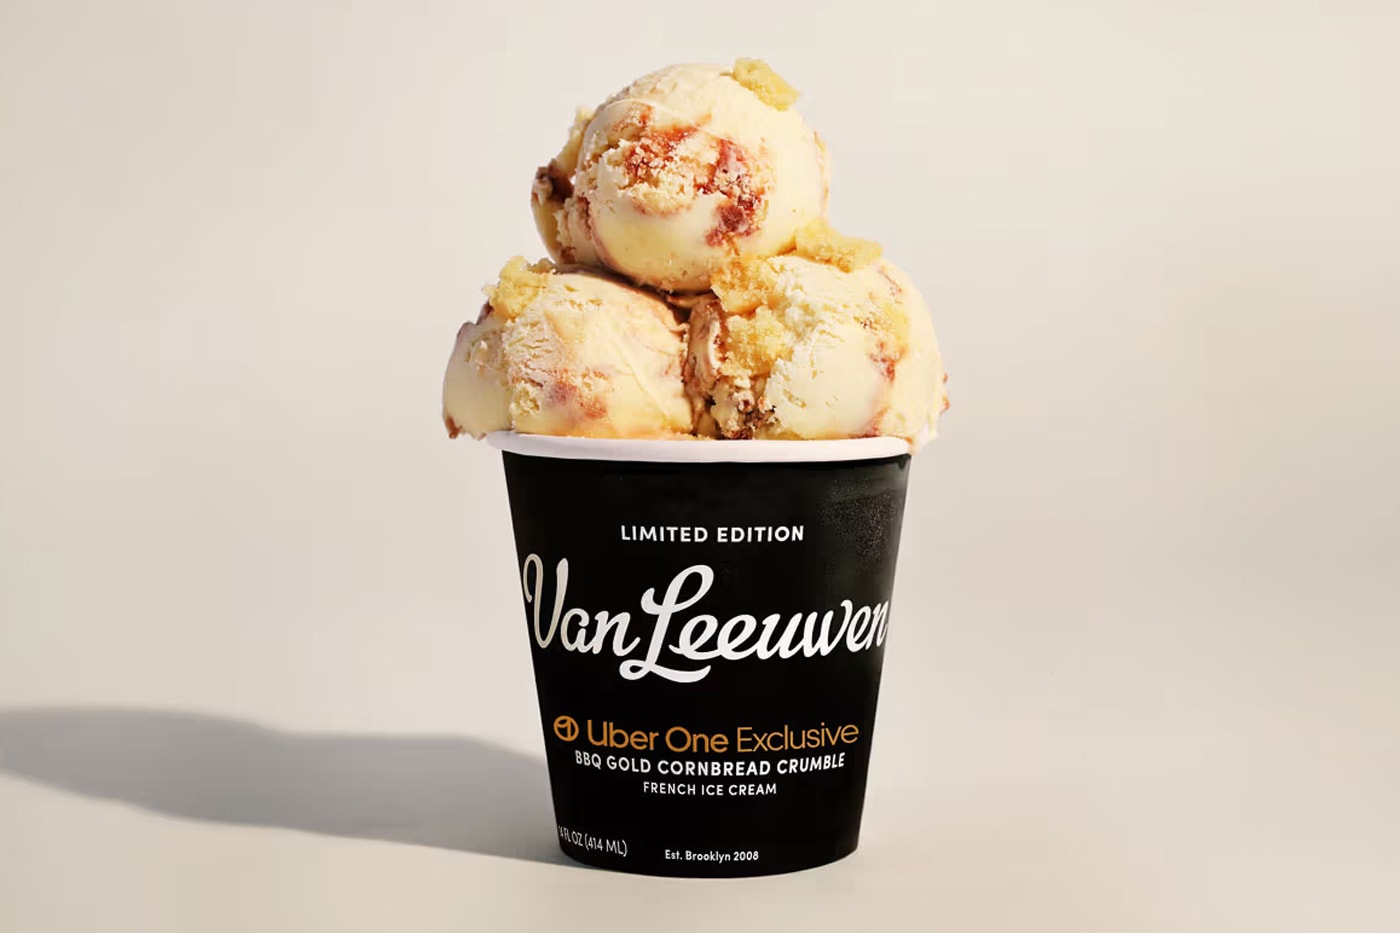 Van Leeuwen SummertimevBBQ Cornbread Crumble ice Cream uber one partnership eats app flavor limited edition members only